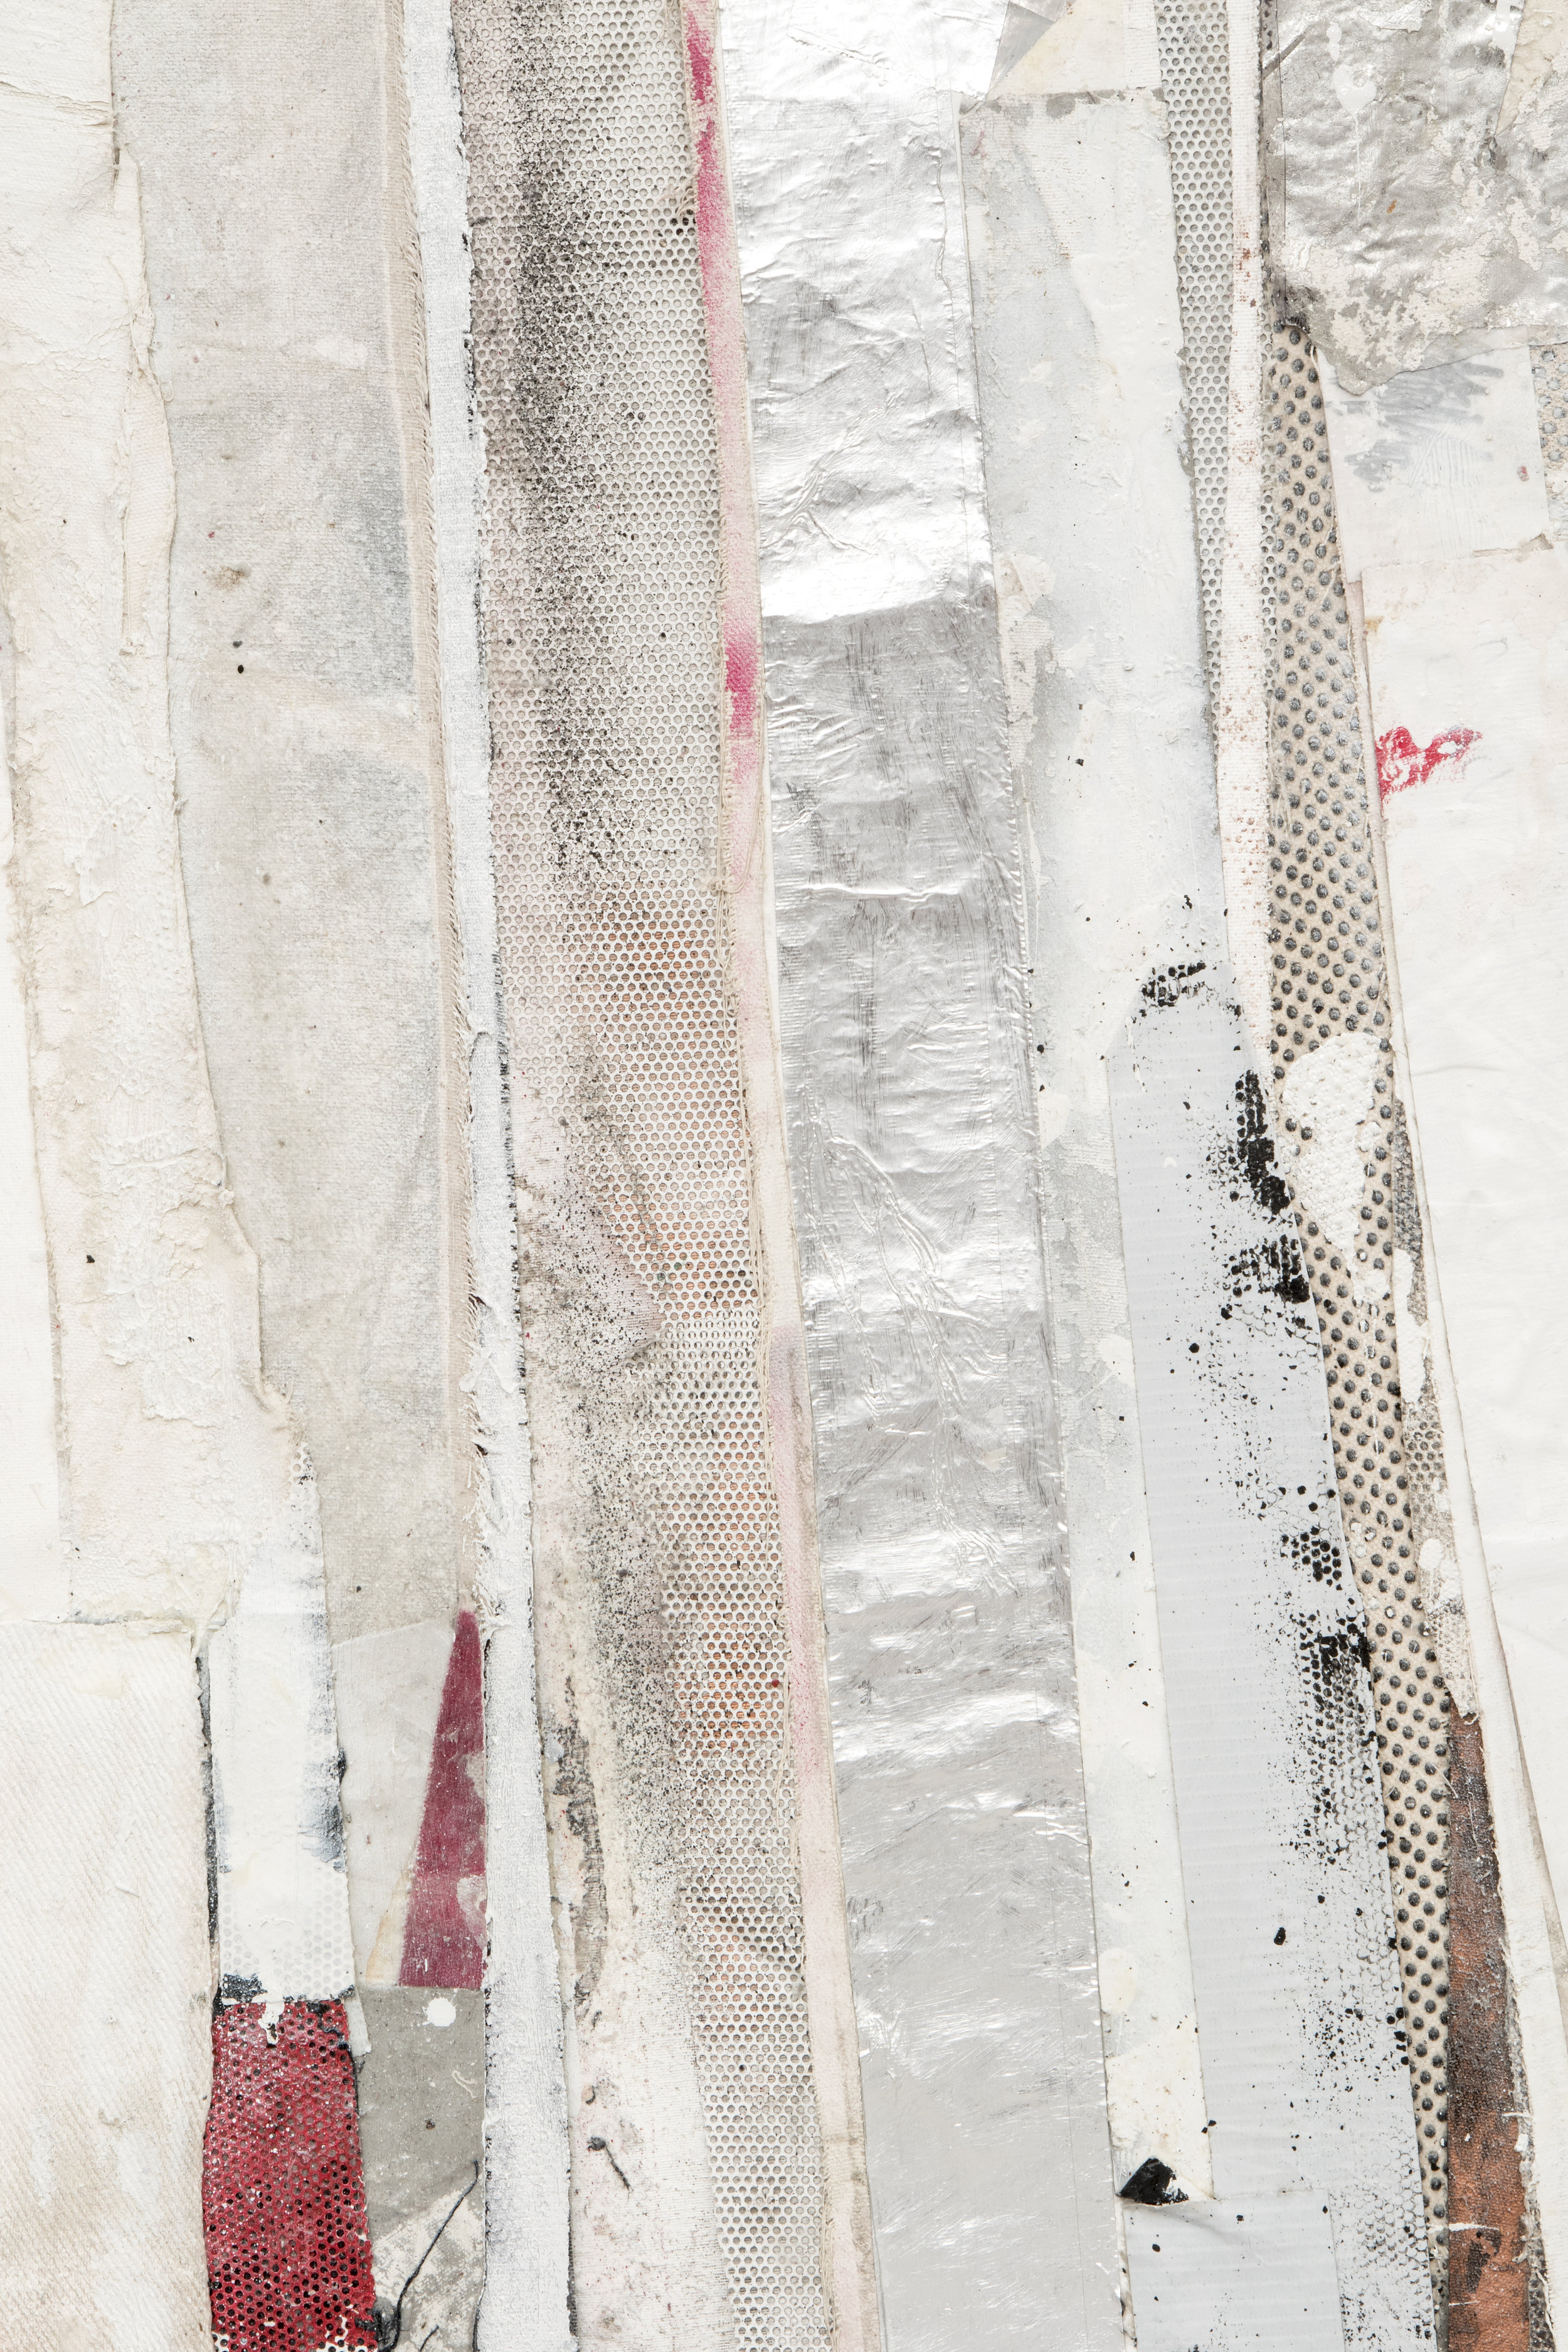   RYAN WALLACE   (detail) Redactor 6 , 2015, enamel, acrylic, vinyl, rubber, concrete, plaster, aluminum tape, canvas on canvas, 72" x 60" 